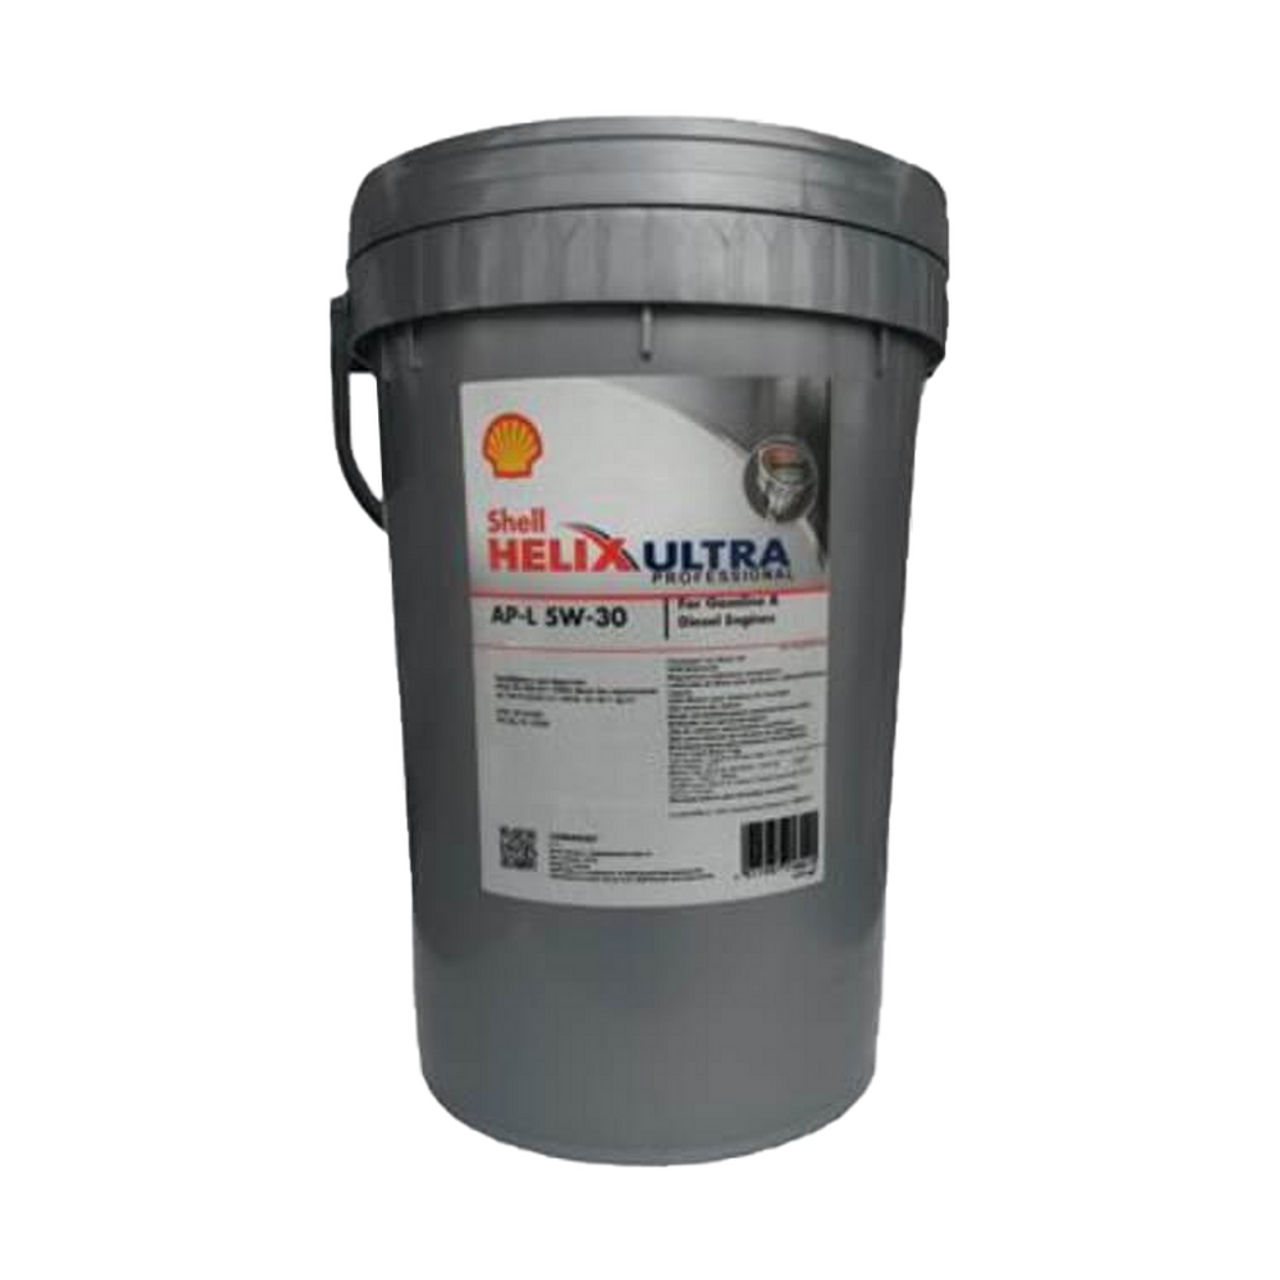 Shell Helix Ultra Pro AP-L 5W-30 - 20L - Quality Bearings